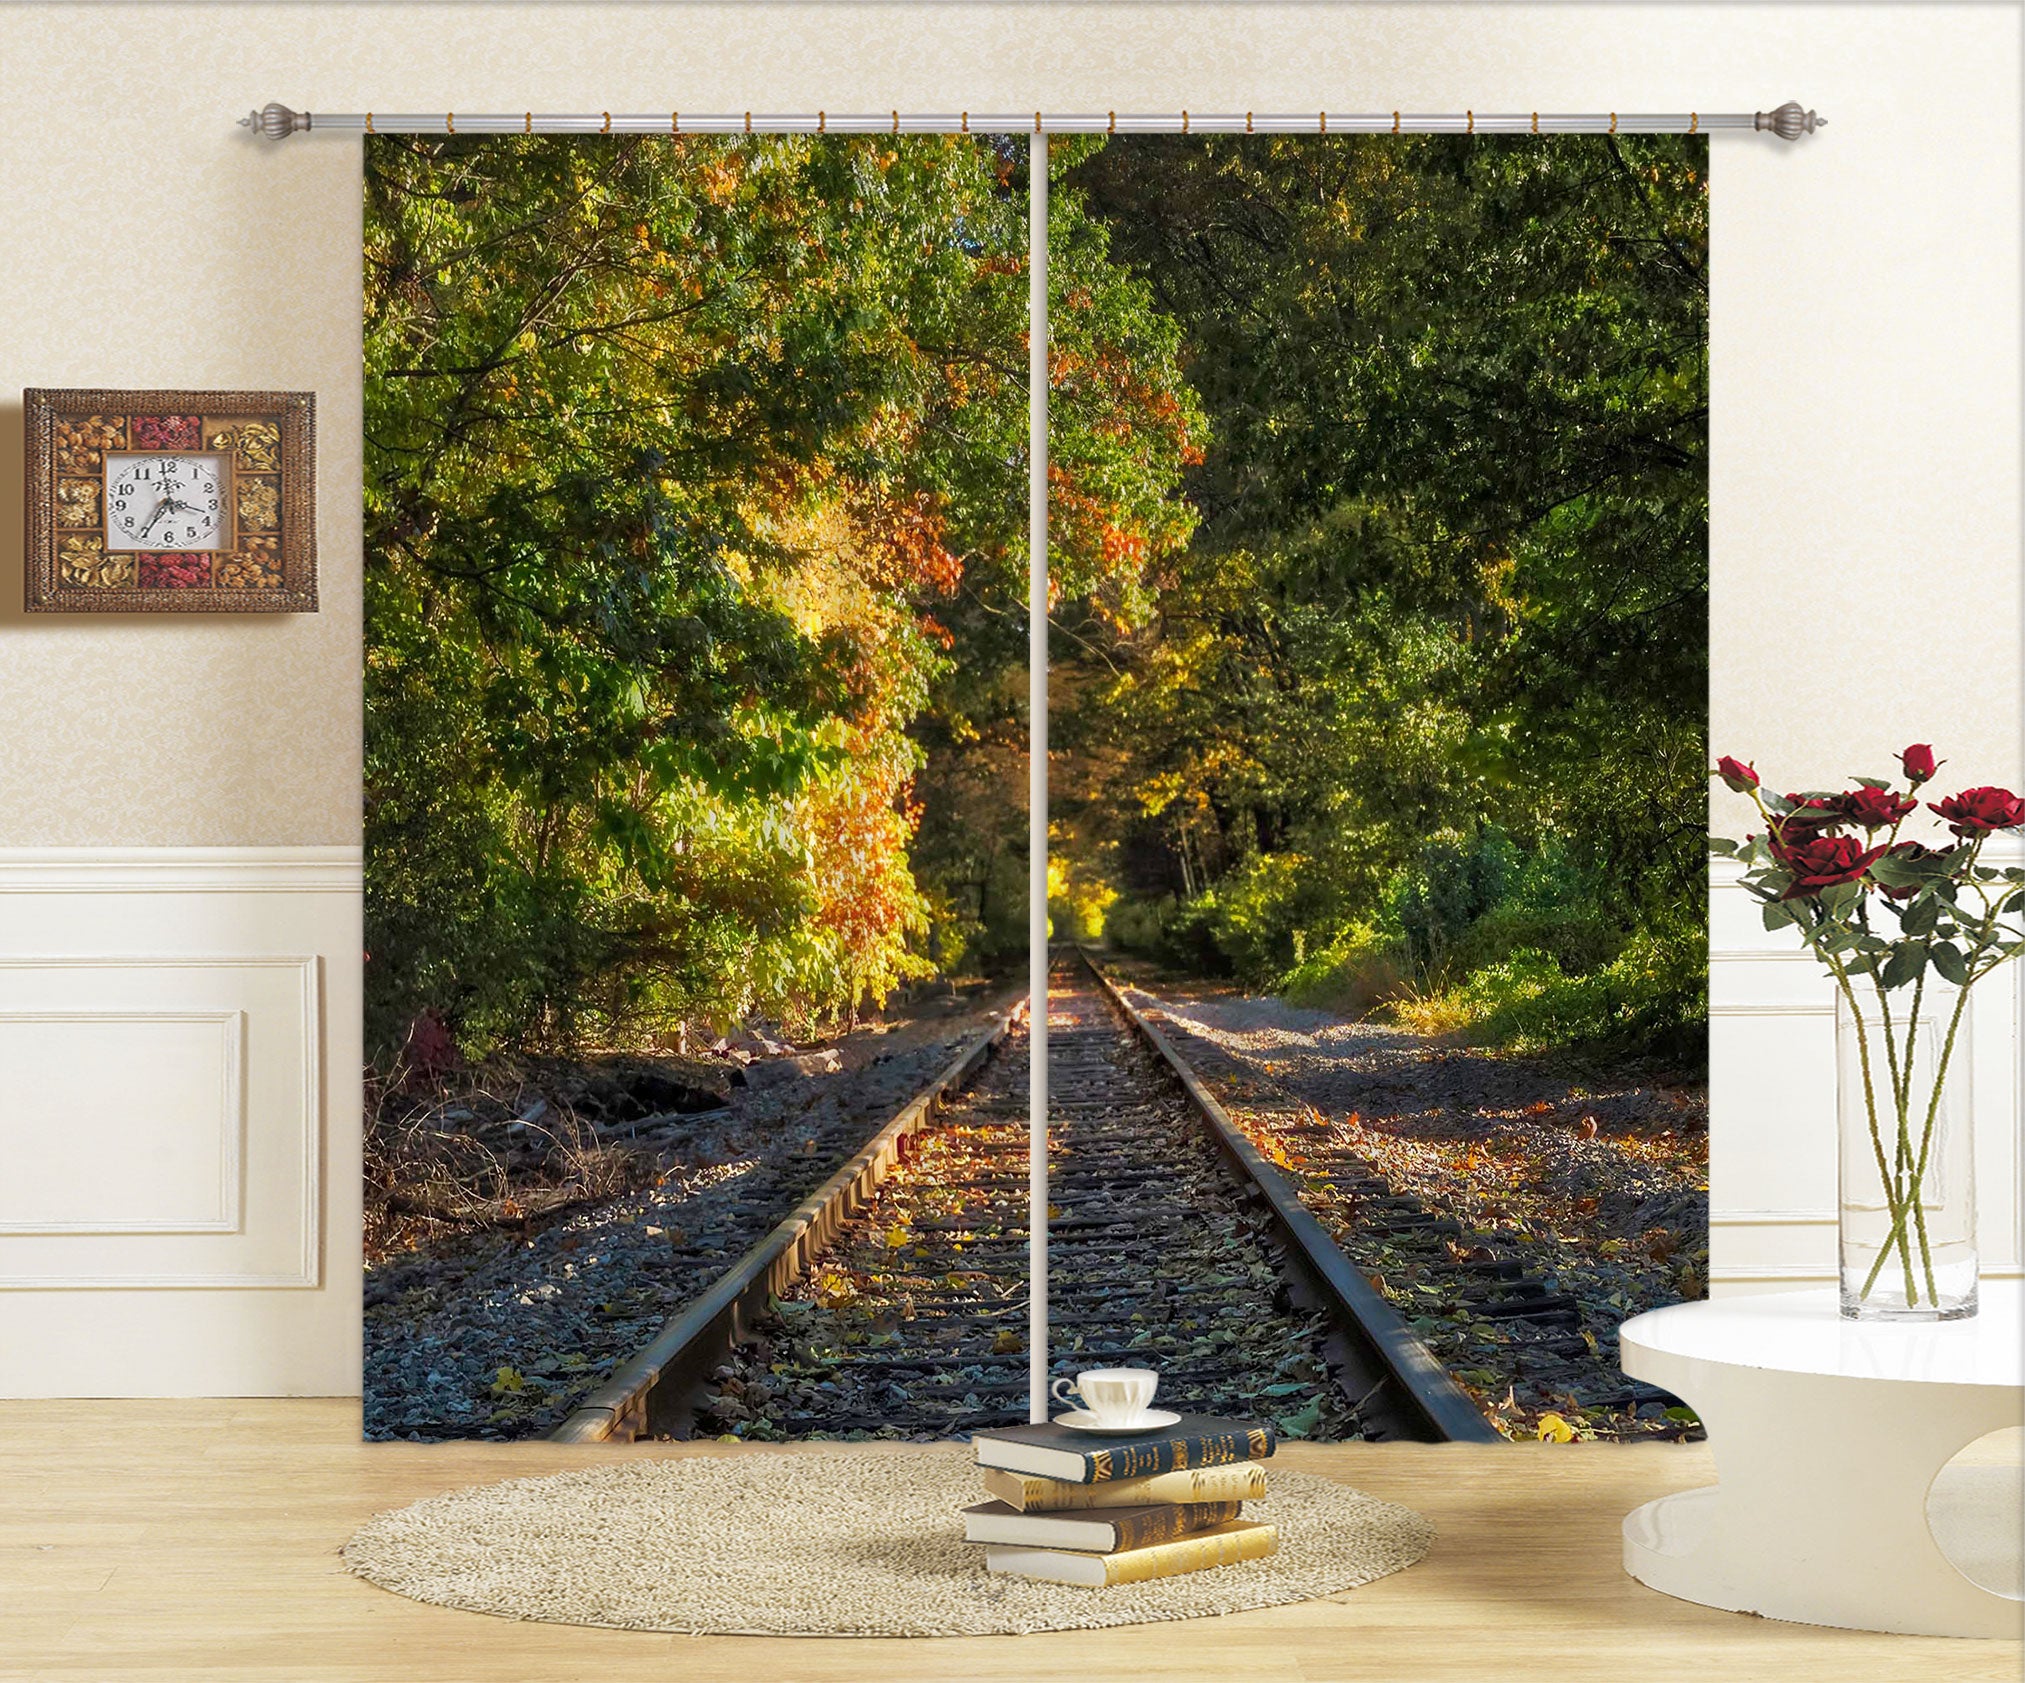 3D Railway Tree 030 Jerry LoFaro Curtain Curtains Drapes